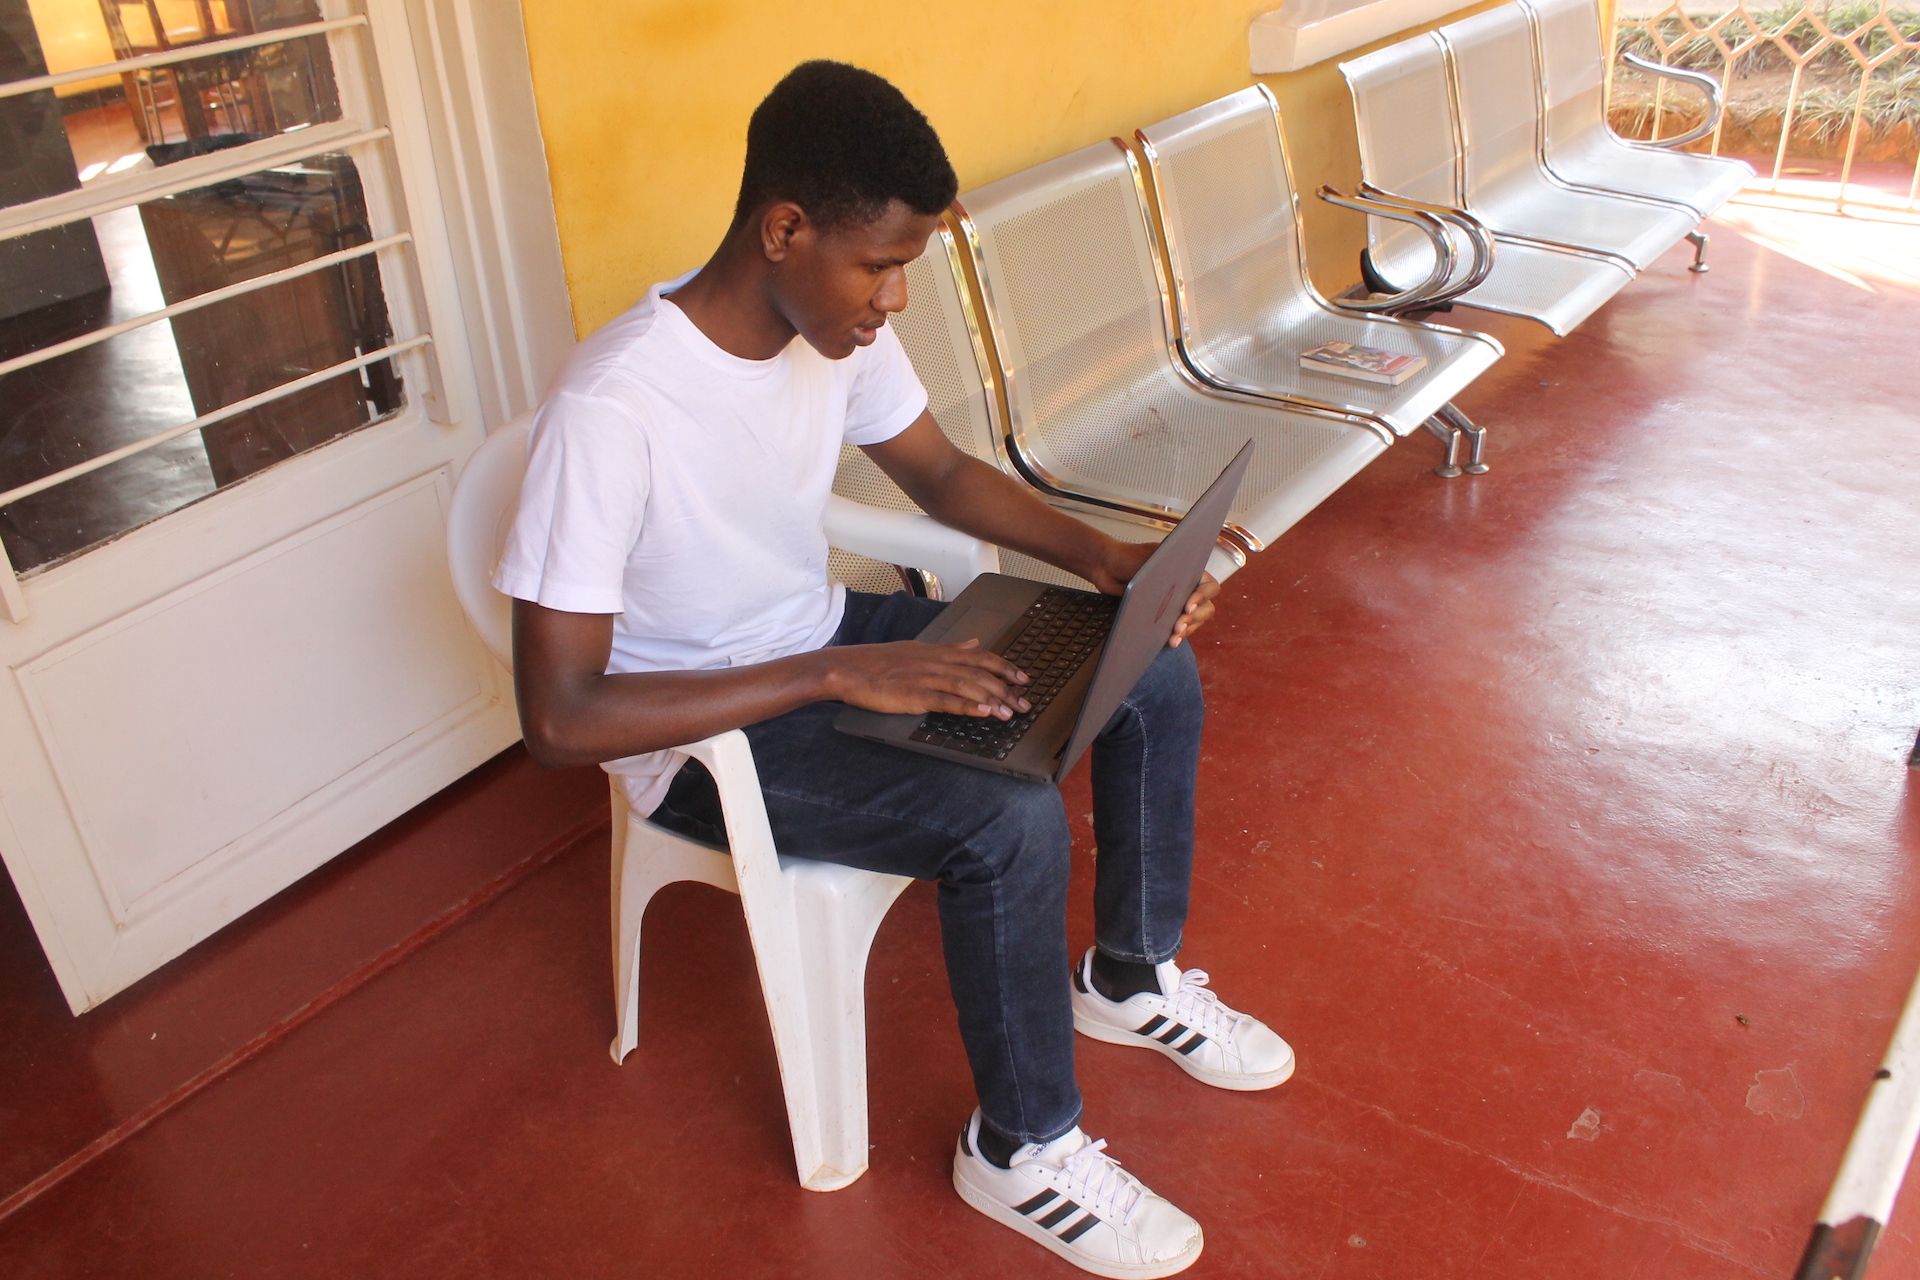 Idrissa studying on his laptop